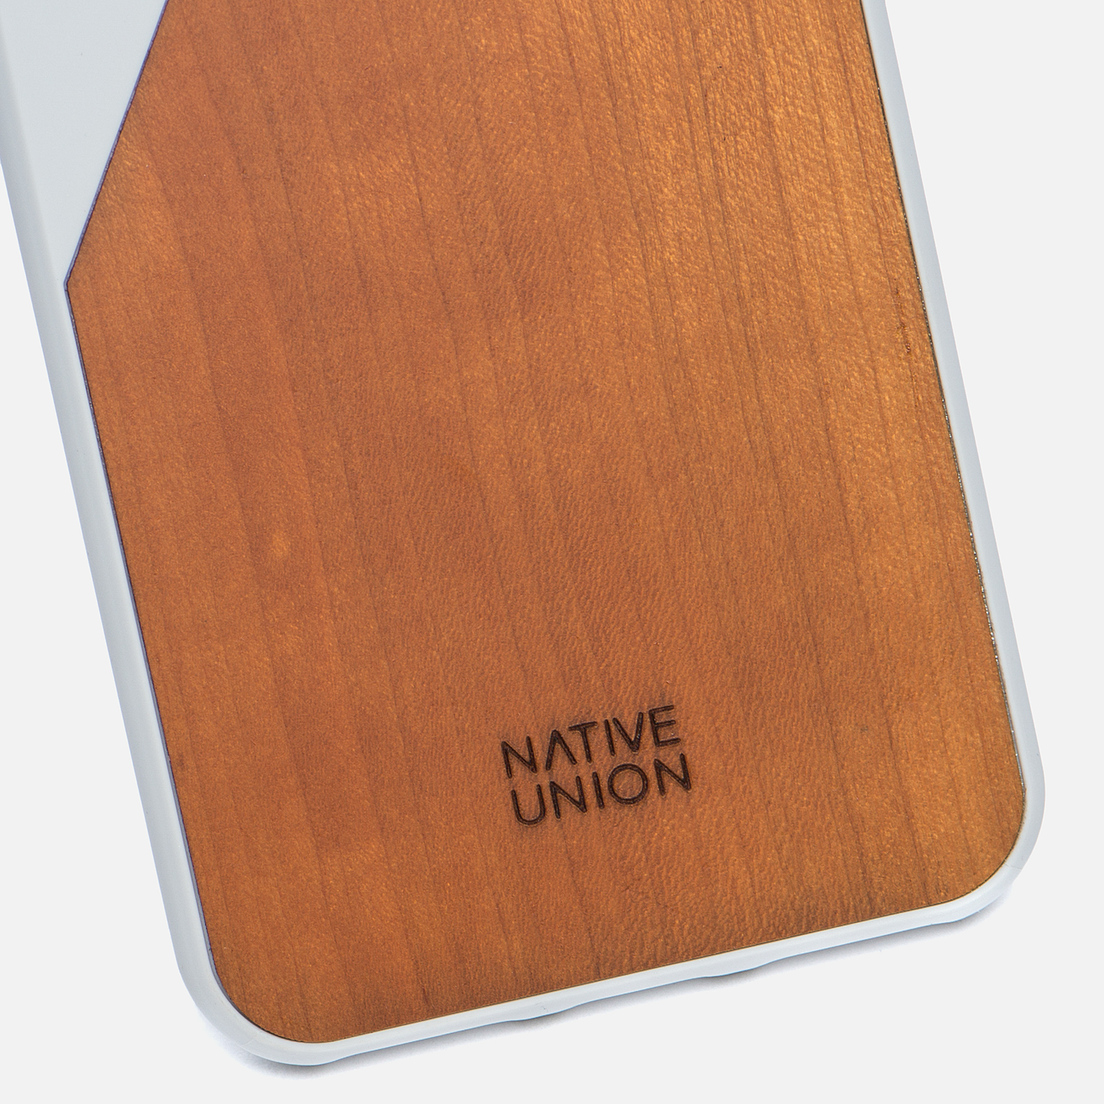 Native Union Чехол Clic Wooden iPhone 7 Plus